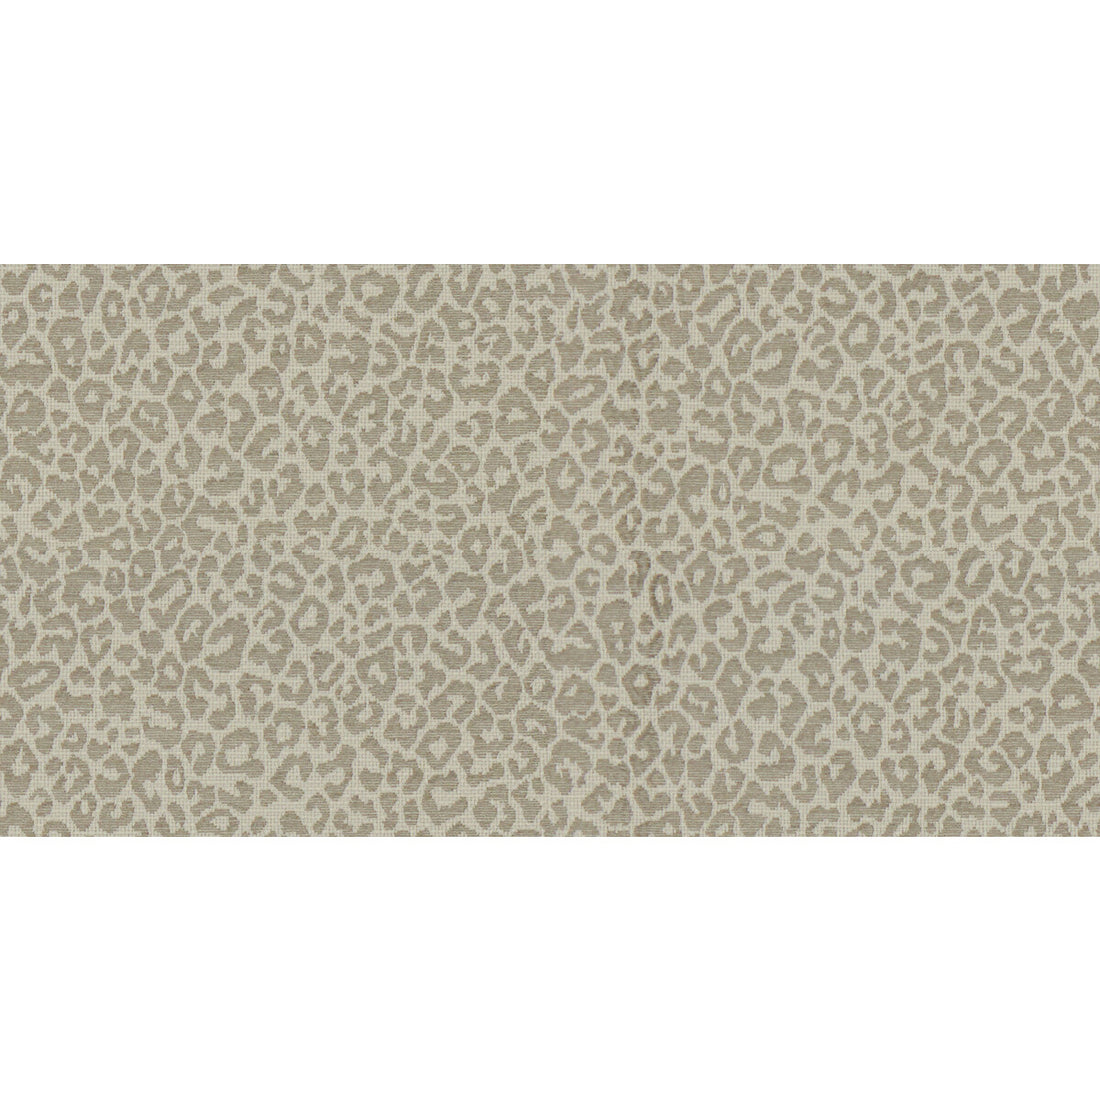 Kravet Smart fabric in 34310-1611 color - pattern 34310.1611.0 - by Kravet Smart